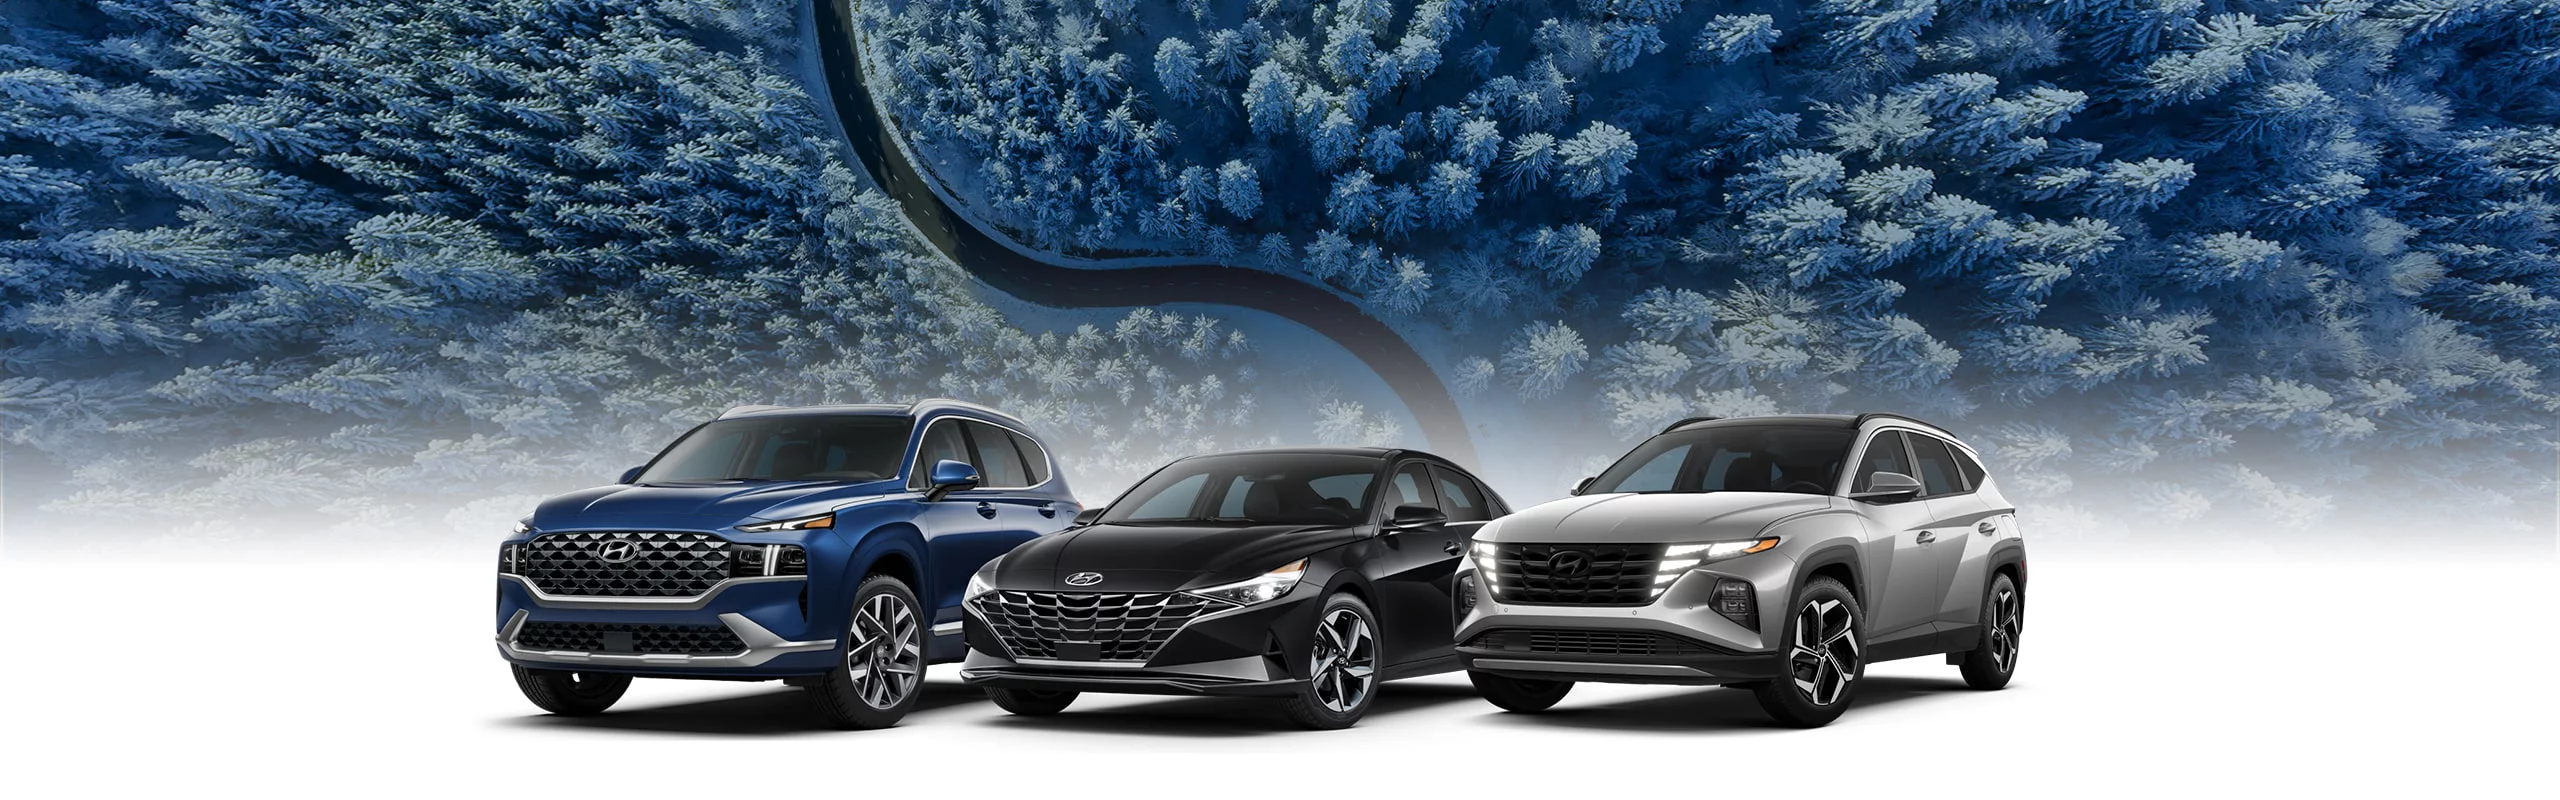 Hyundai Getaway Sales Event